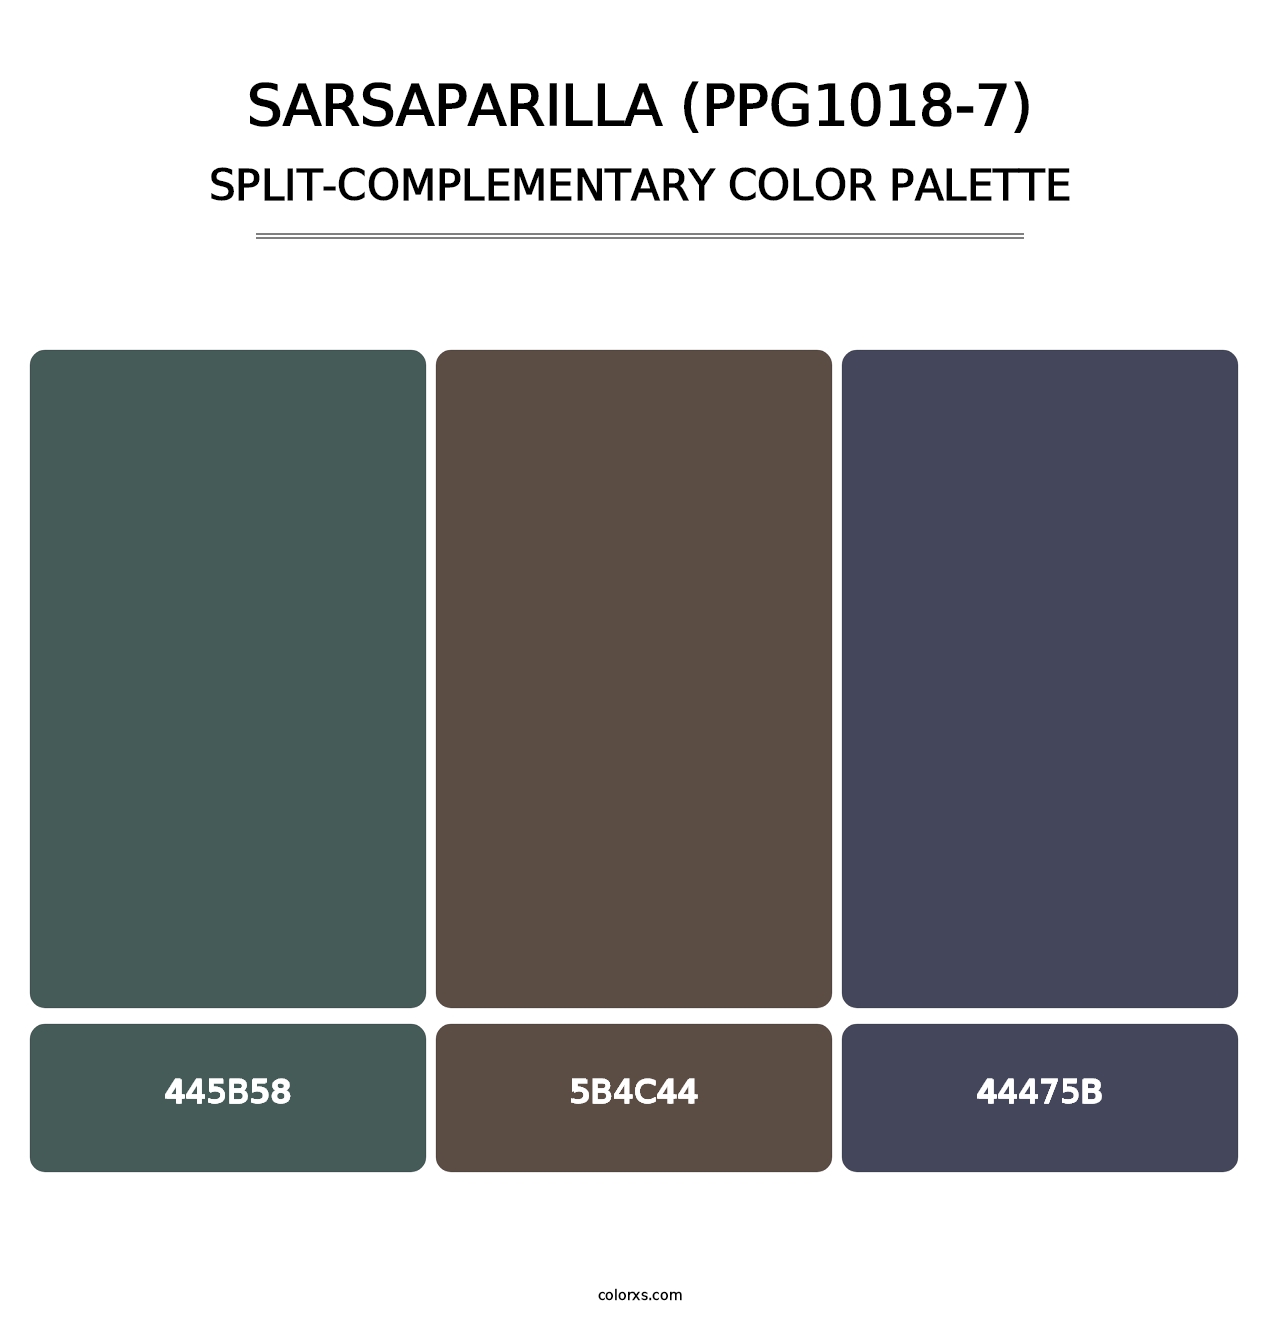 Sarsaparilla (PPG1018-7) - Split-Complementary Color Palette